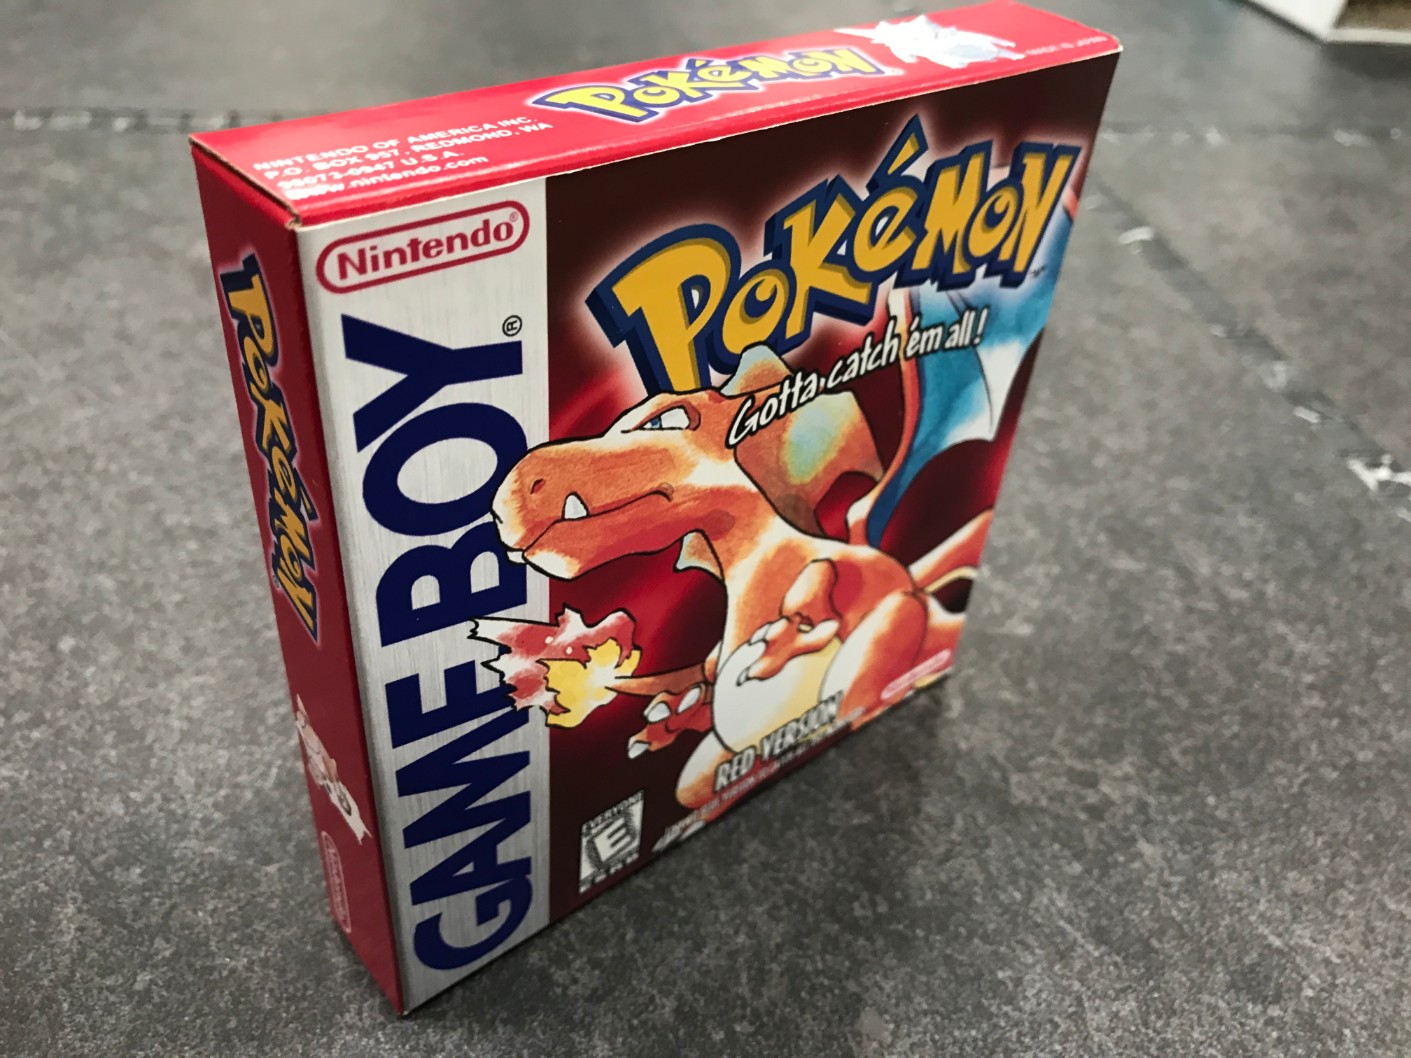 Pokémon Red Version, Game Boy, Games